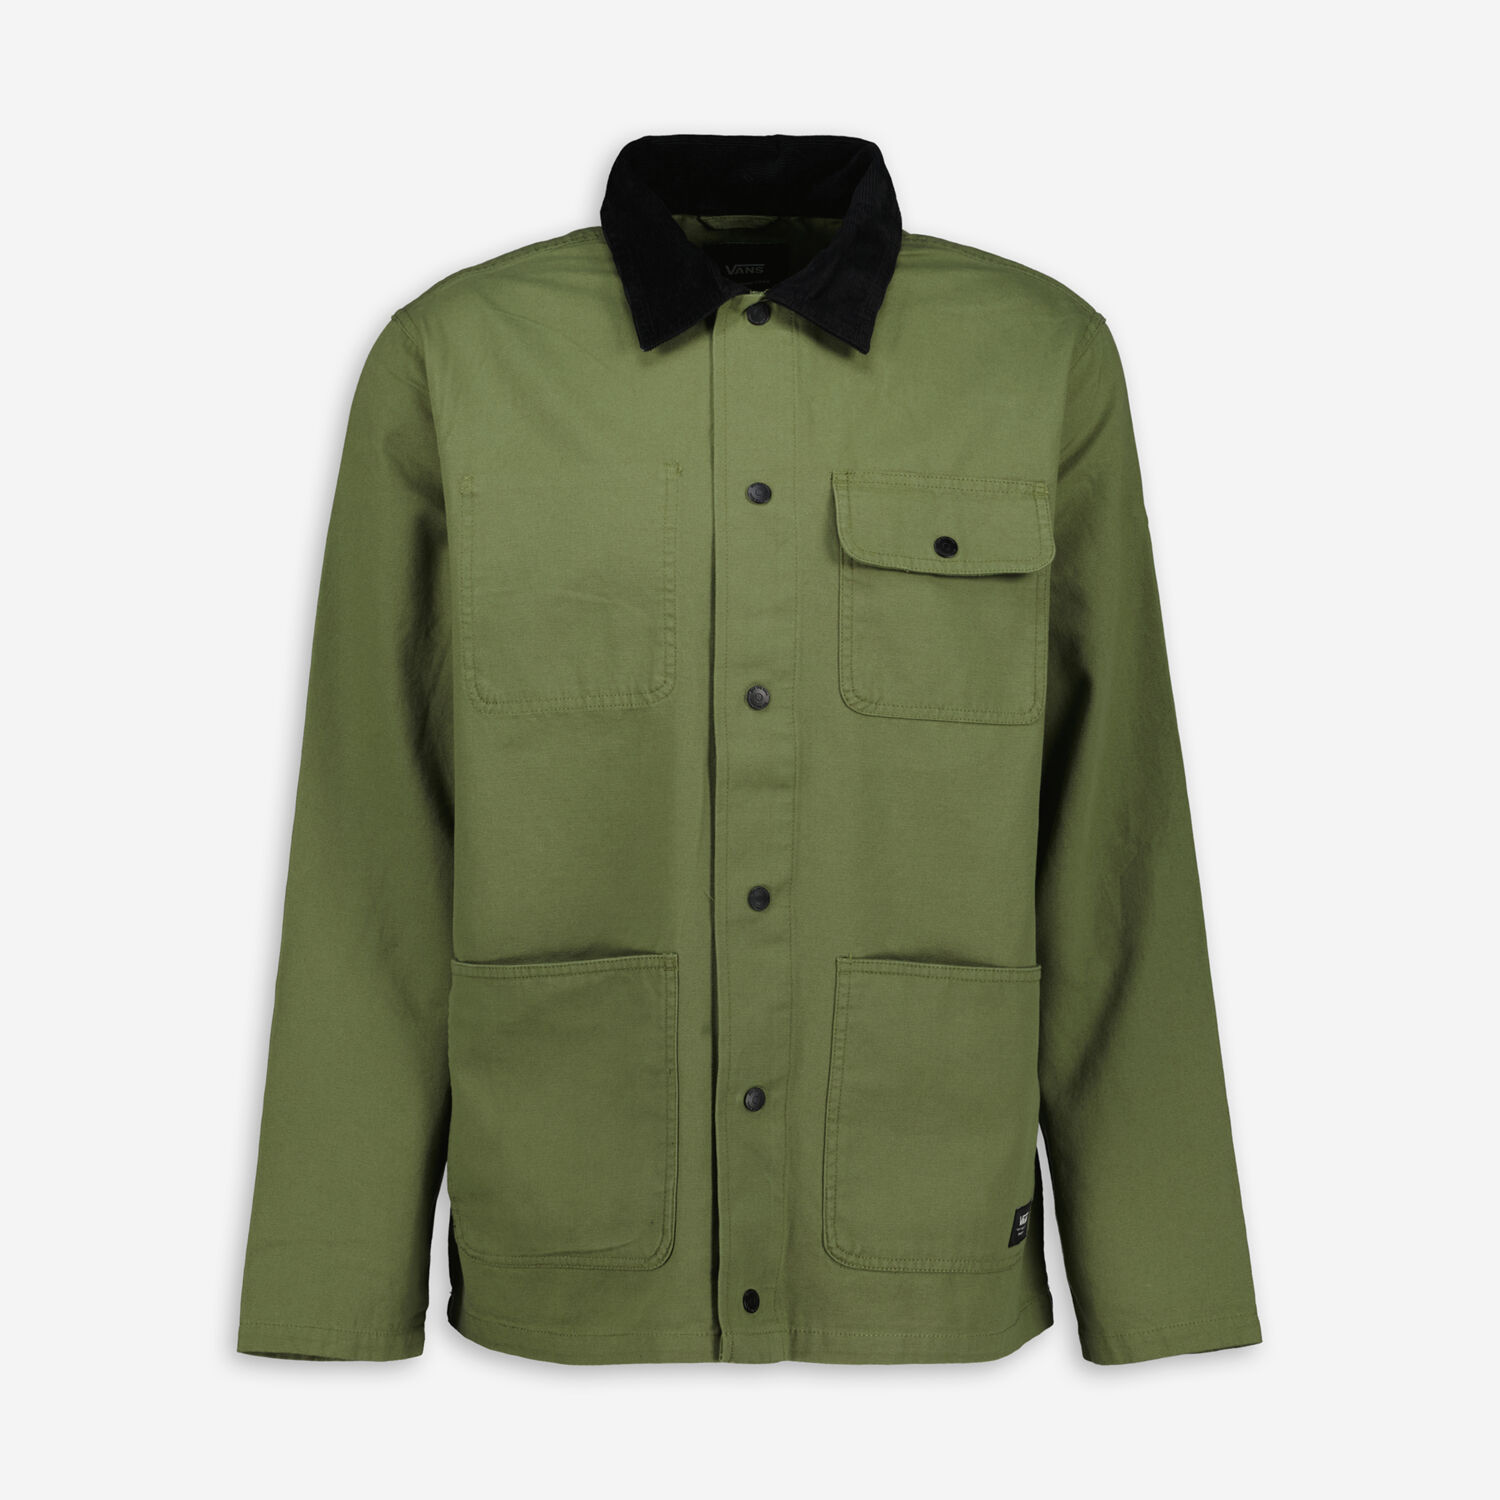 Green Drill Chore Coat Overshirt - TK Maxx UK